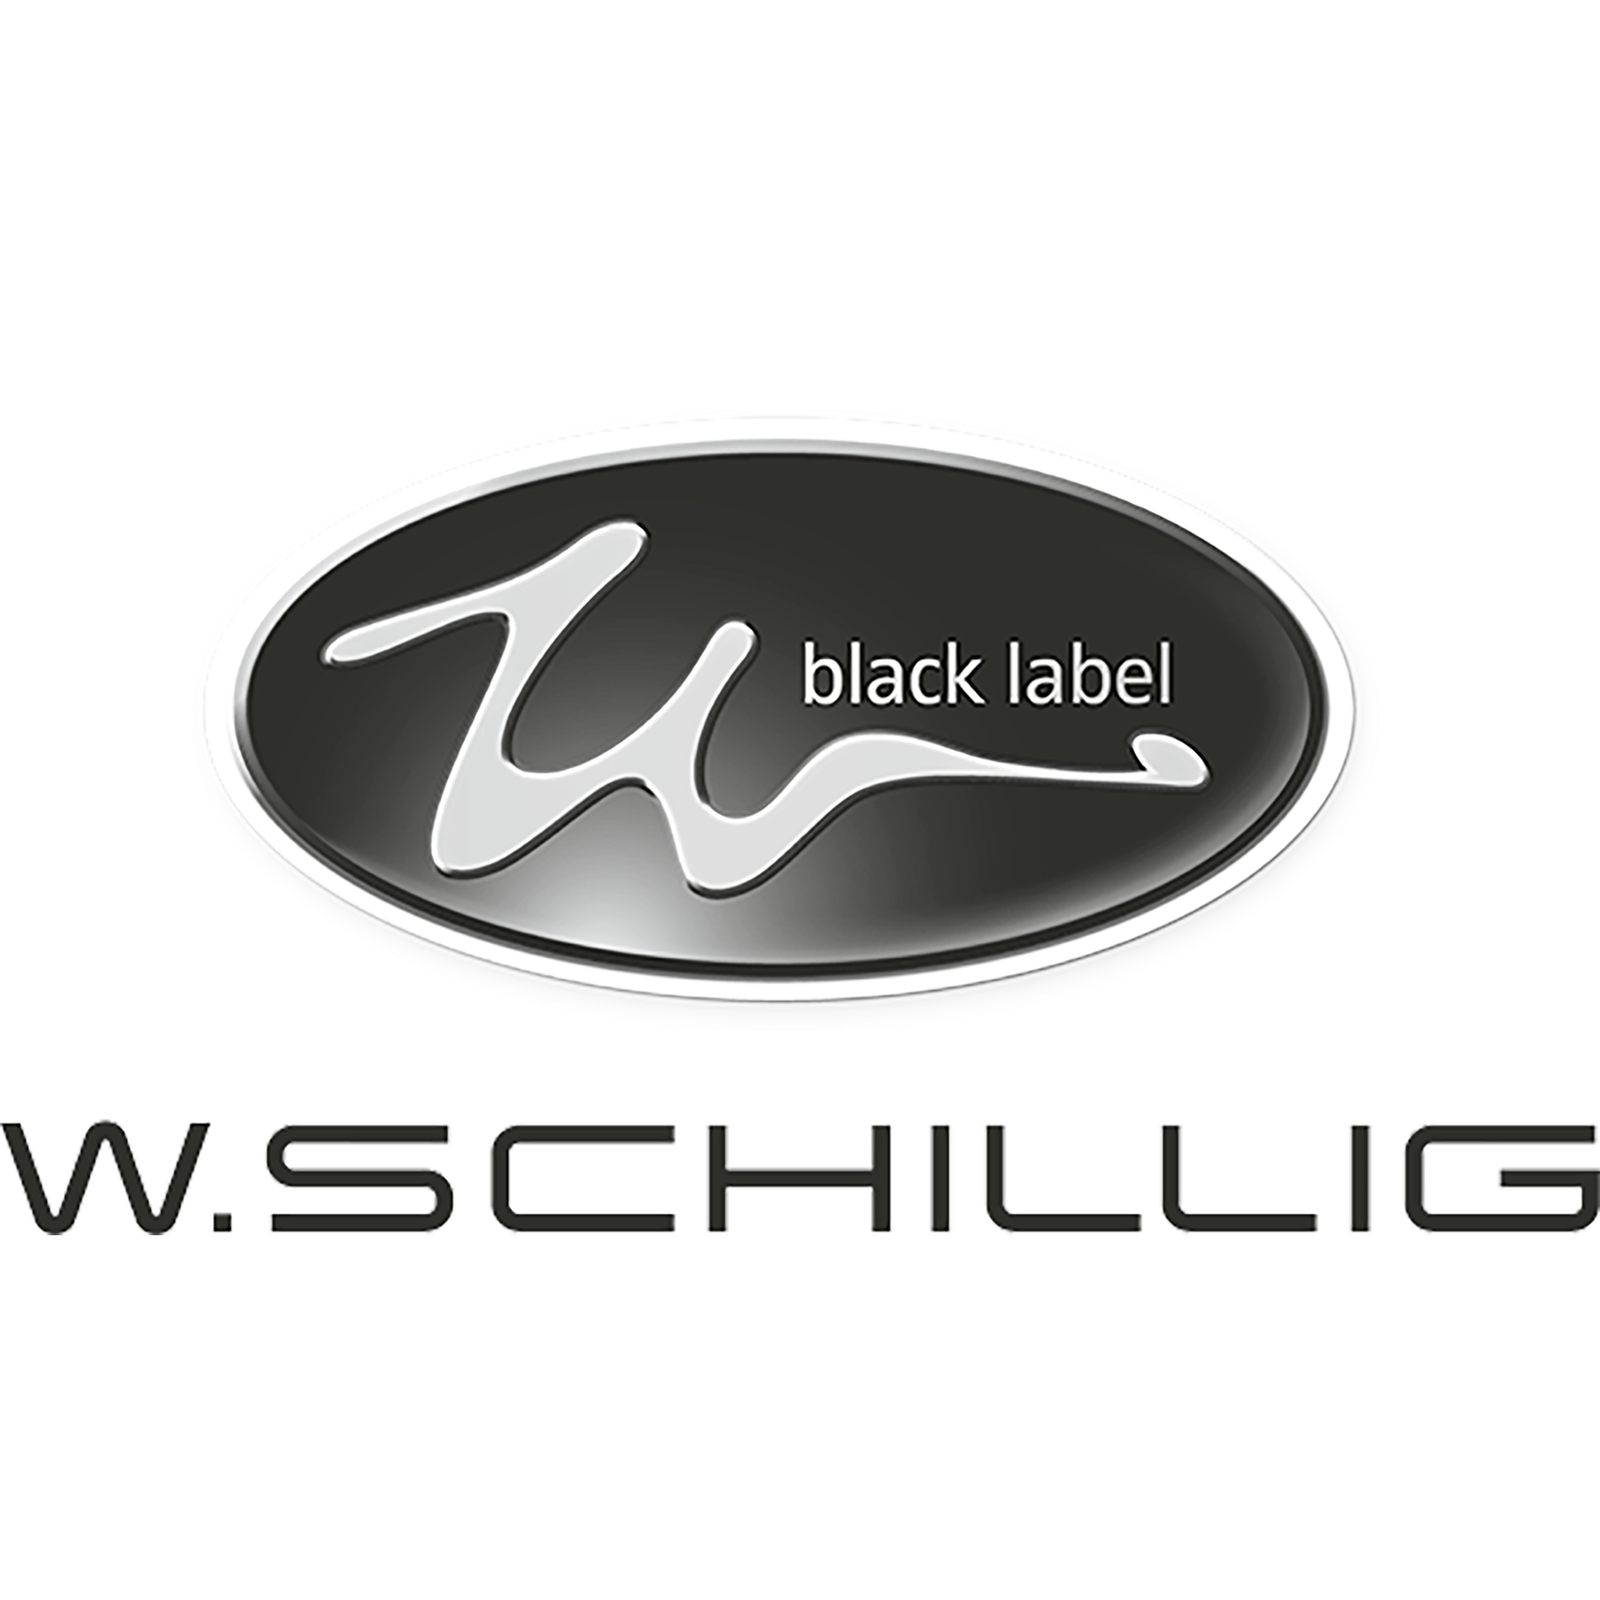 black label by W.SCHILLIG